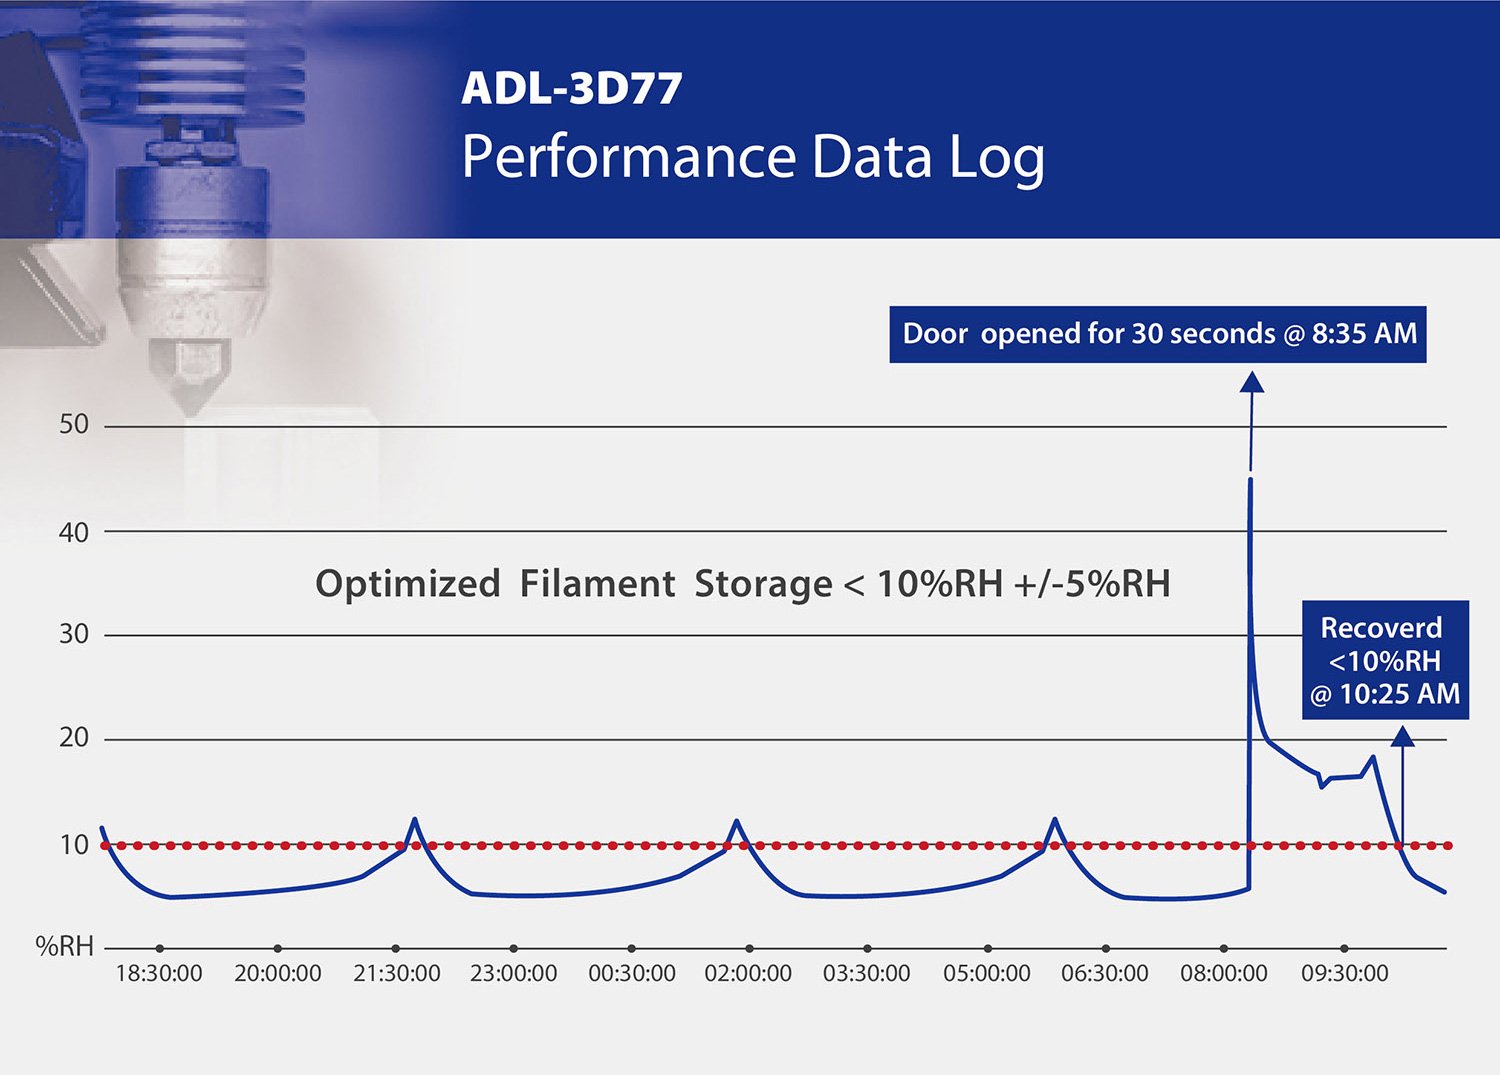 StatPro ADL-3D77 Performance Data Log